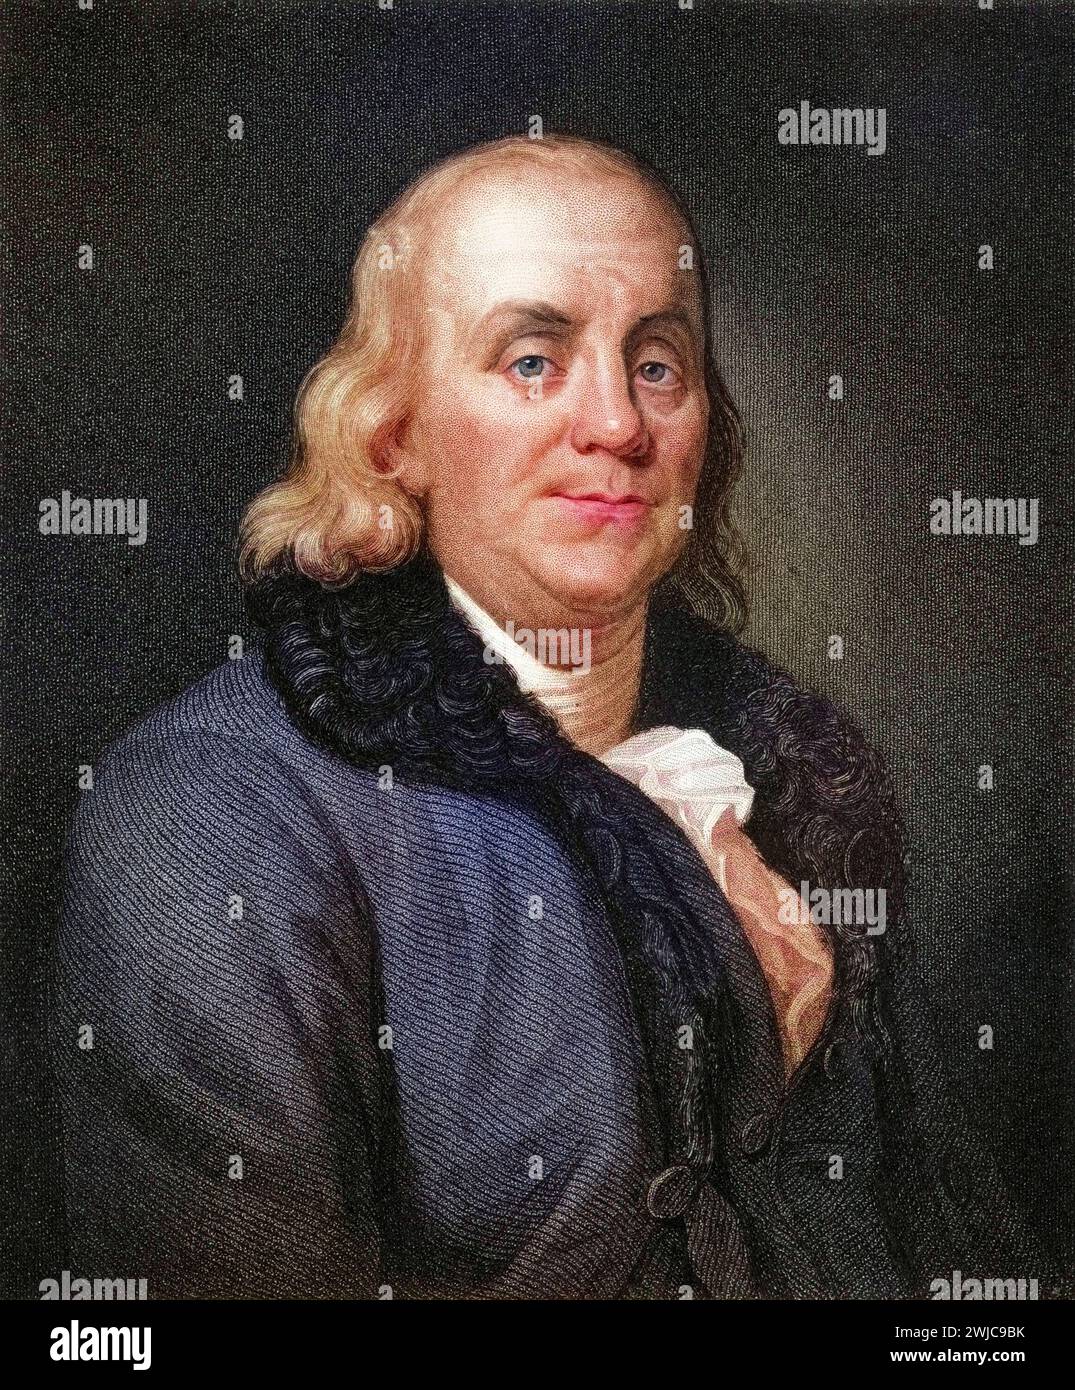 Benjamin Franklin geb. 17. Januar 1706 in Boston gest. 17. April 1790 in Philadelphia, Pennsylvania war ein amerikanischer Drucker, Verleger, Schrifts Stock Photo